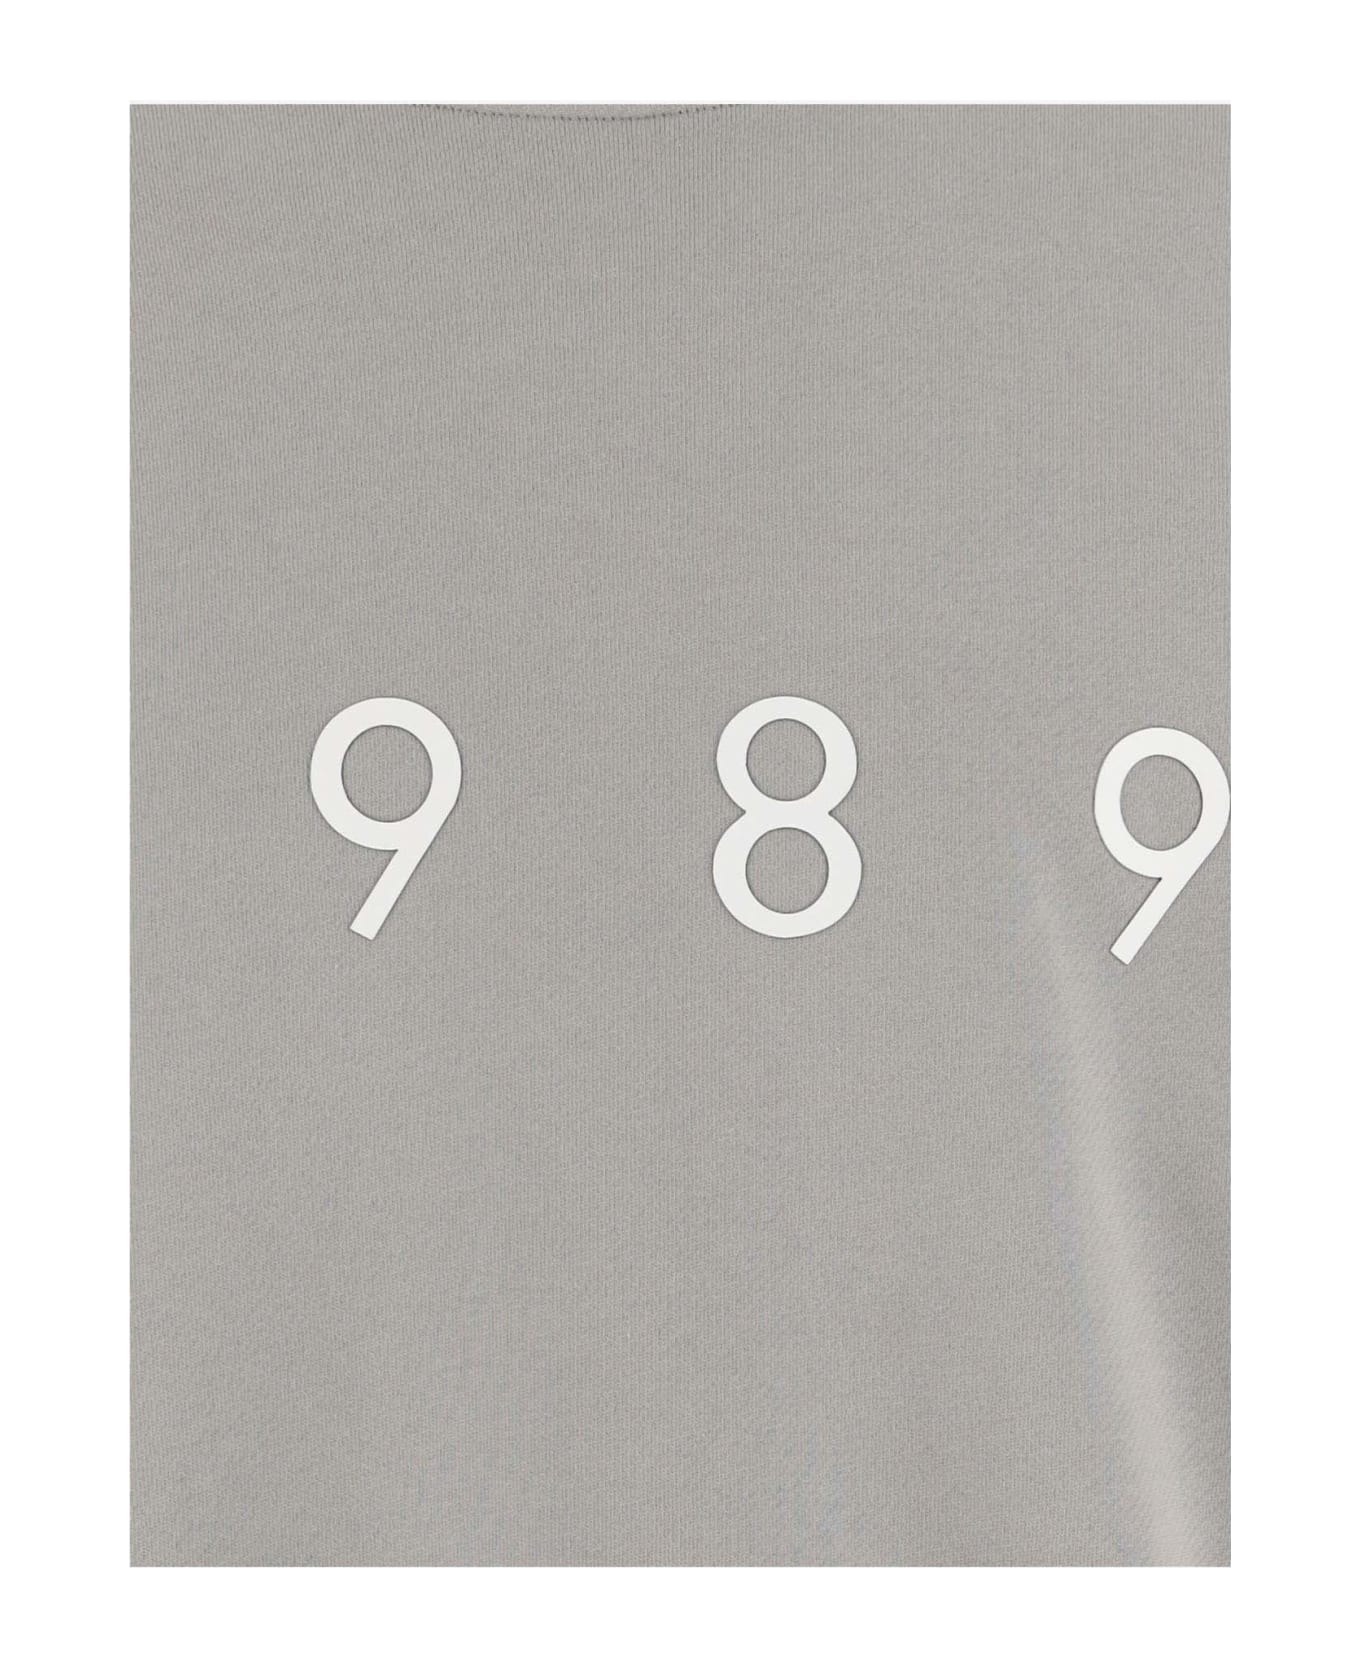 1989 Studio Cotton Sweatshirt With Logo - Grey